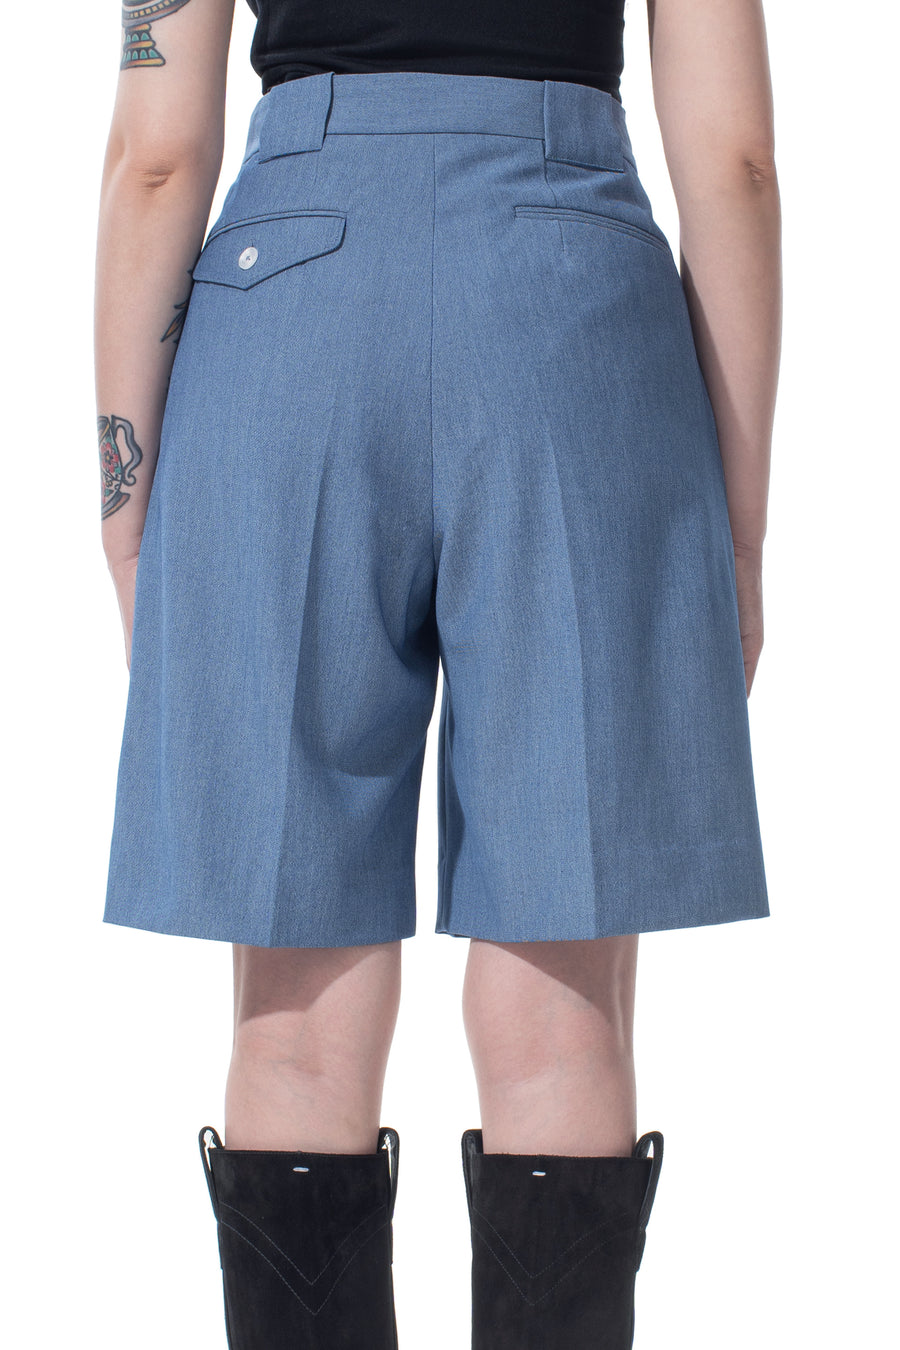 Blue Pleat Shorts